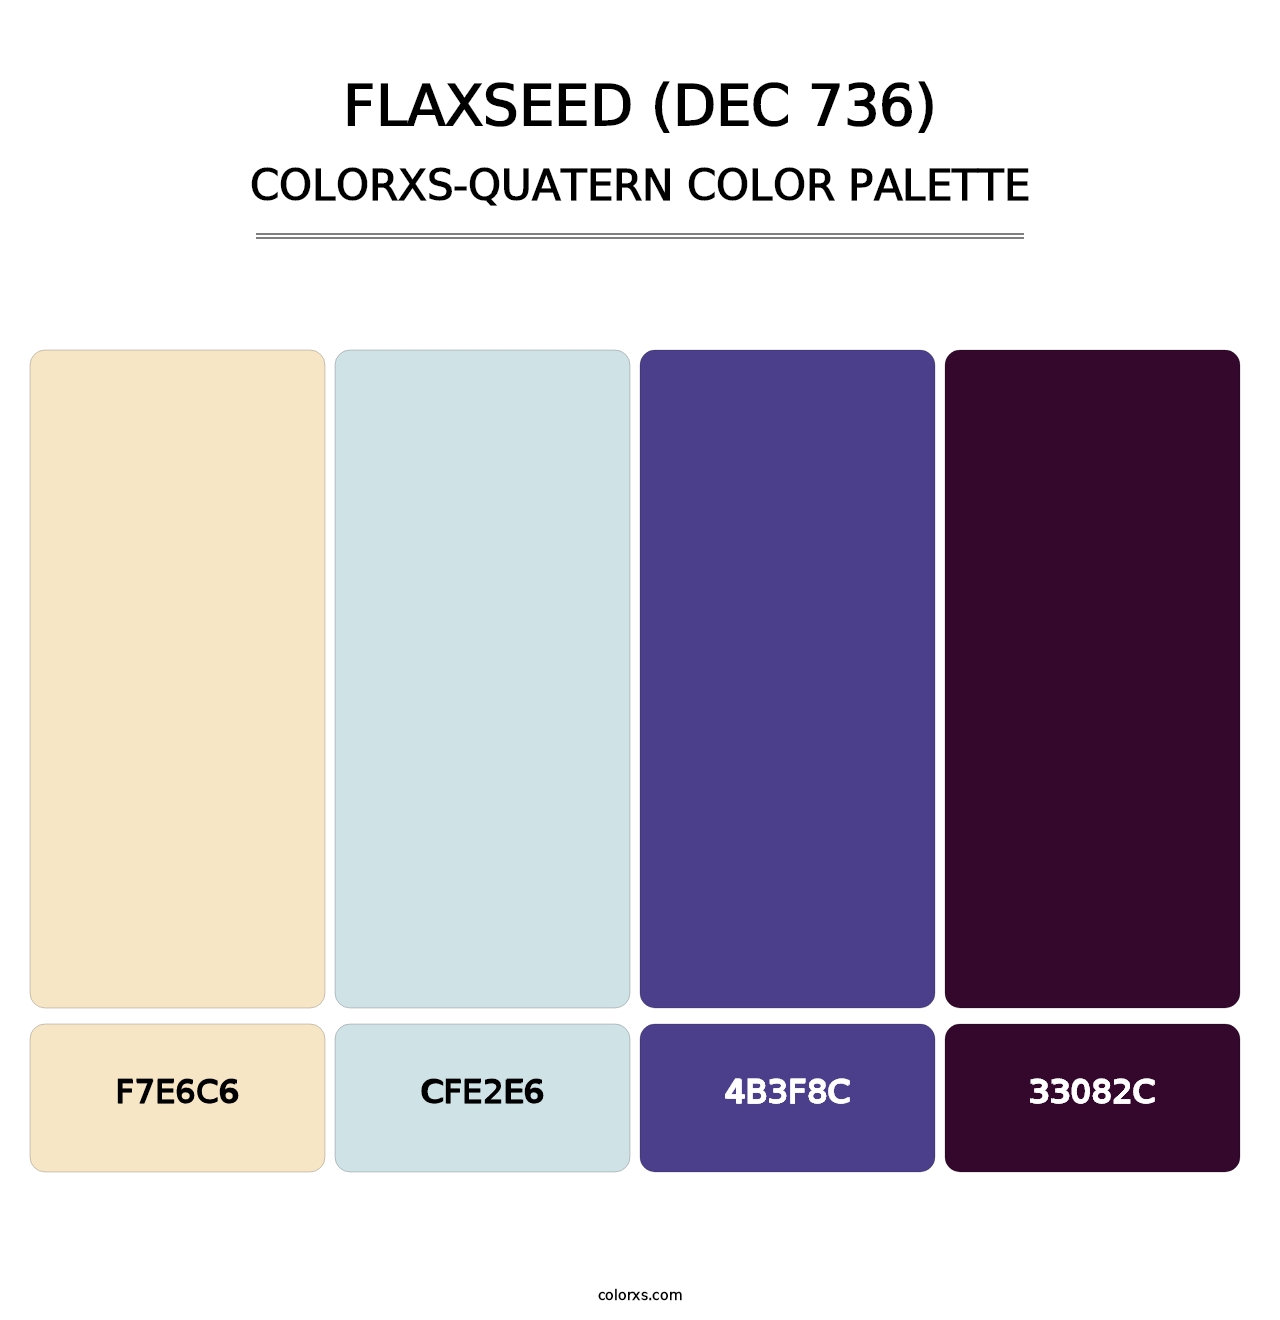 Flaxseed (DEC 736) - Colorxs Quatern Palette